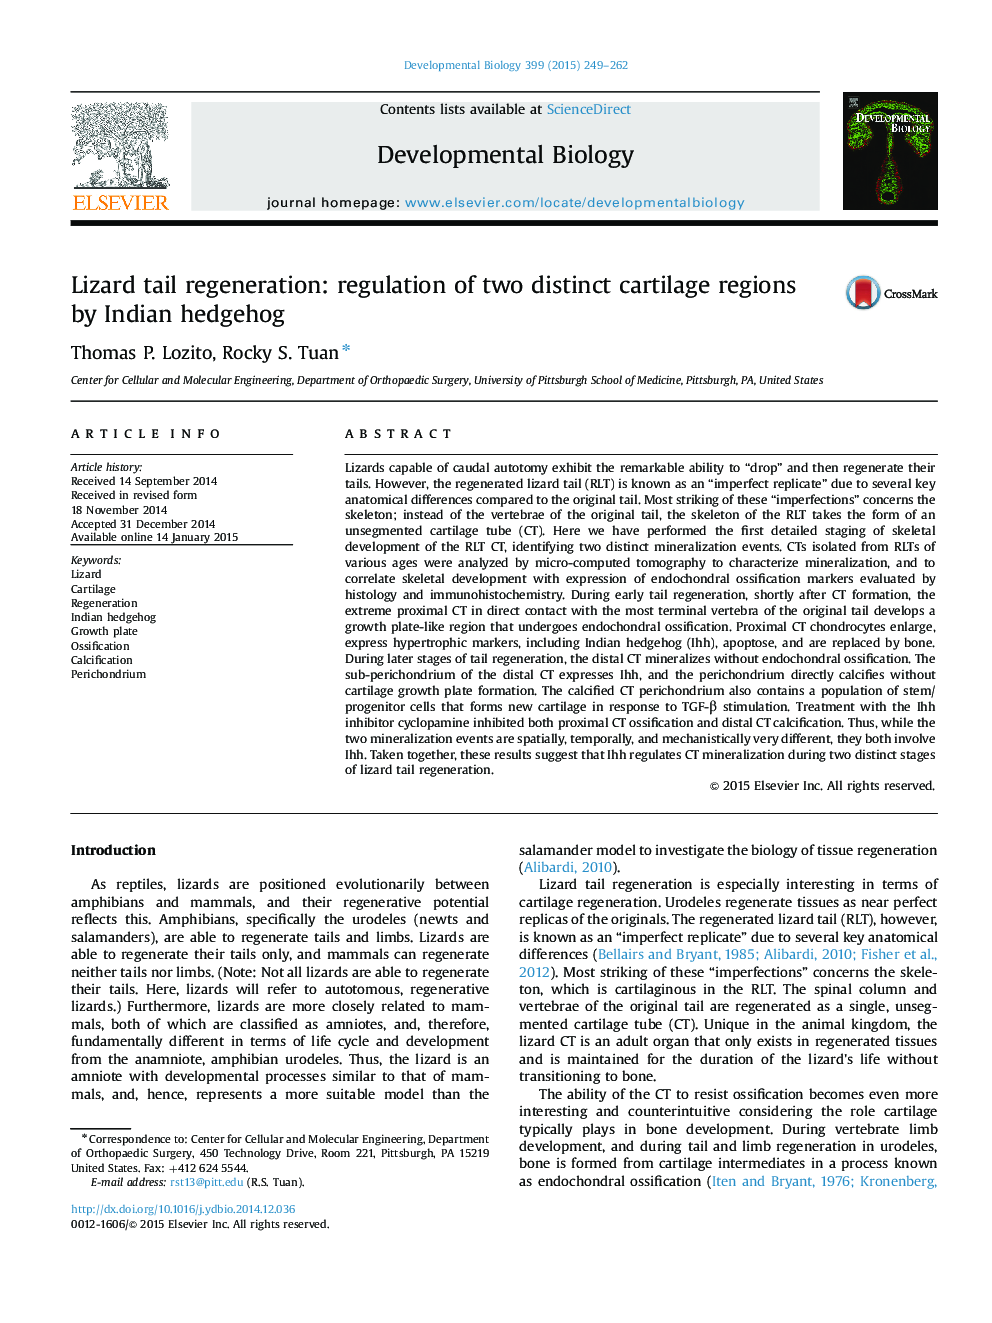 Lizard tail regeneration: regulation of two distinct cartilage regions by Indian hedgehog